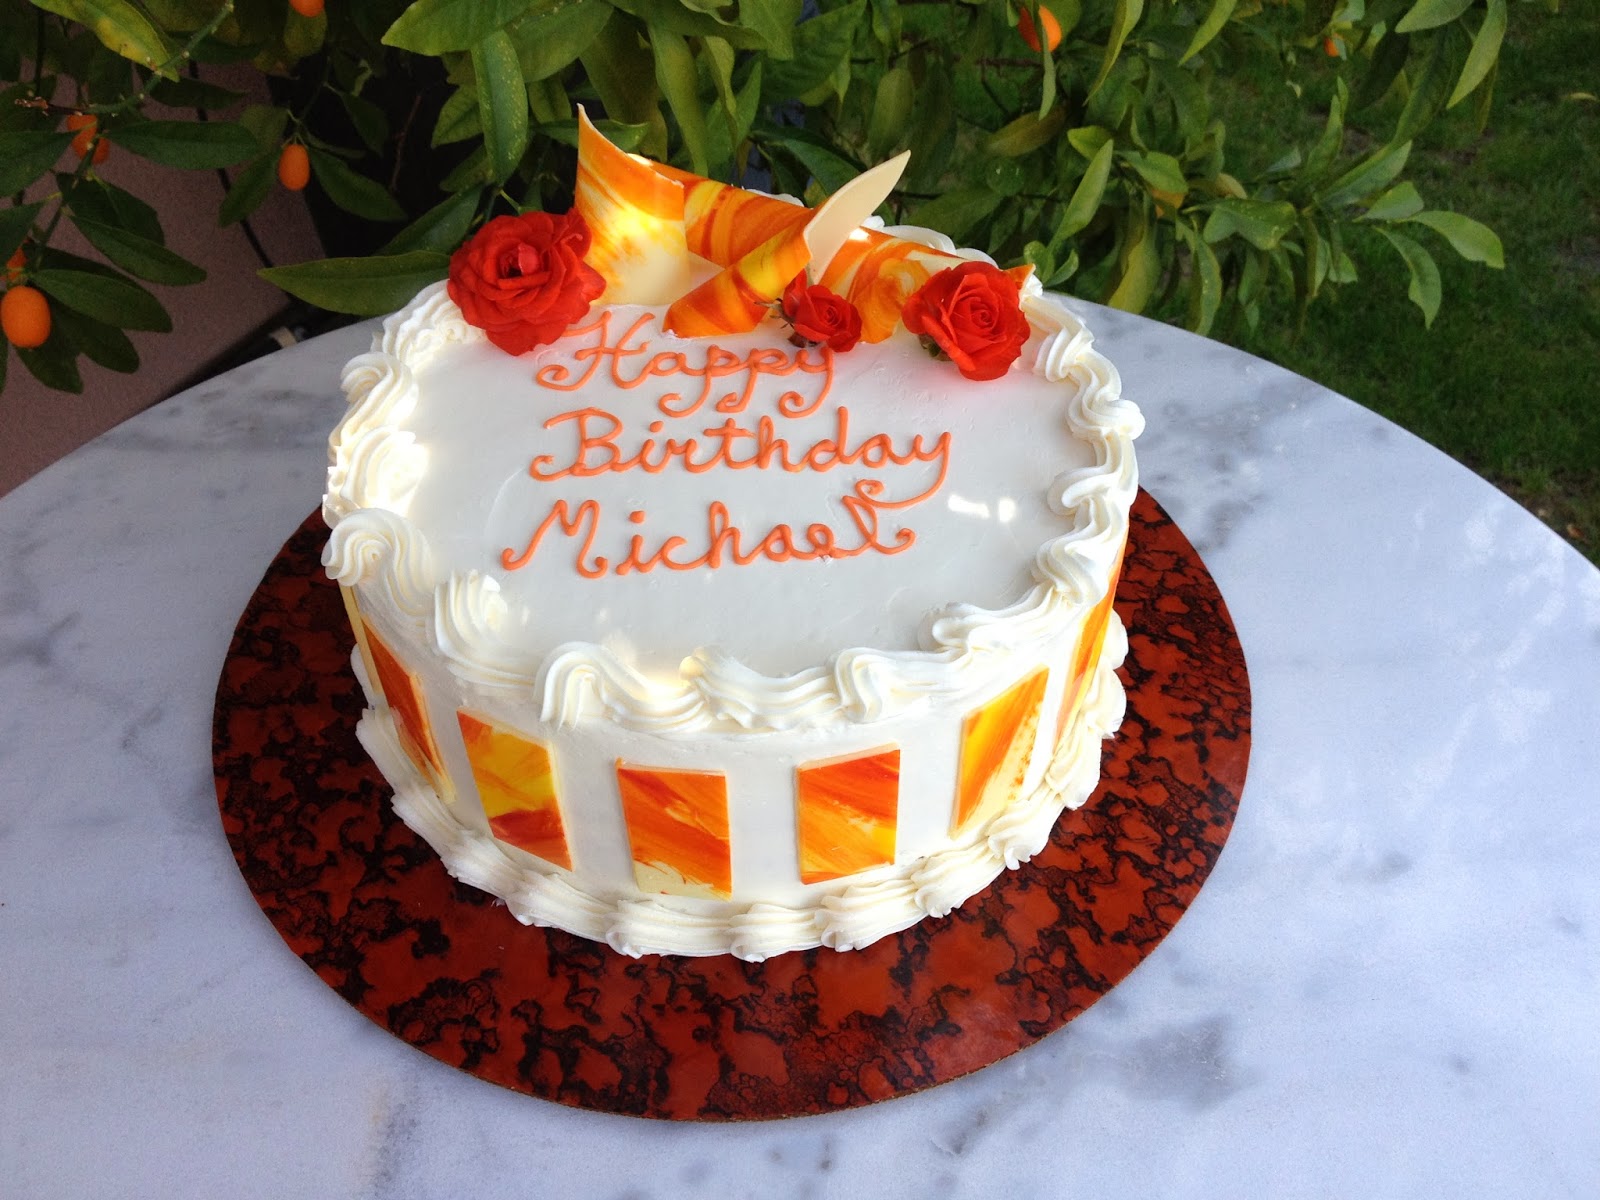 Happy Birthday Michael Cake